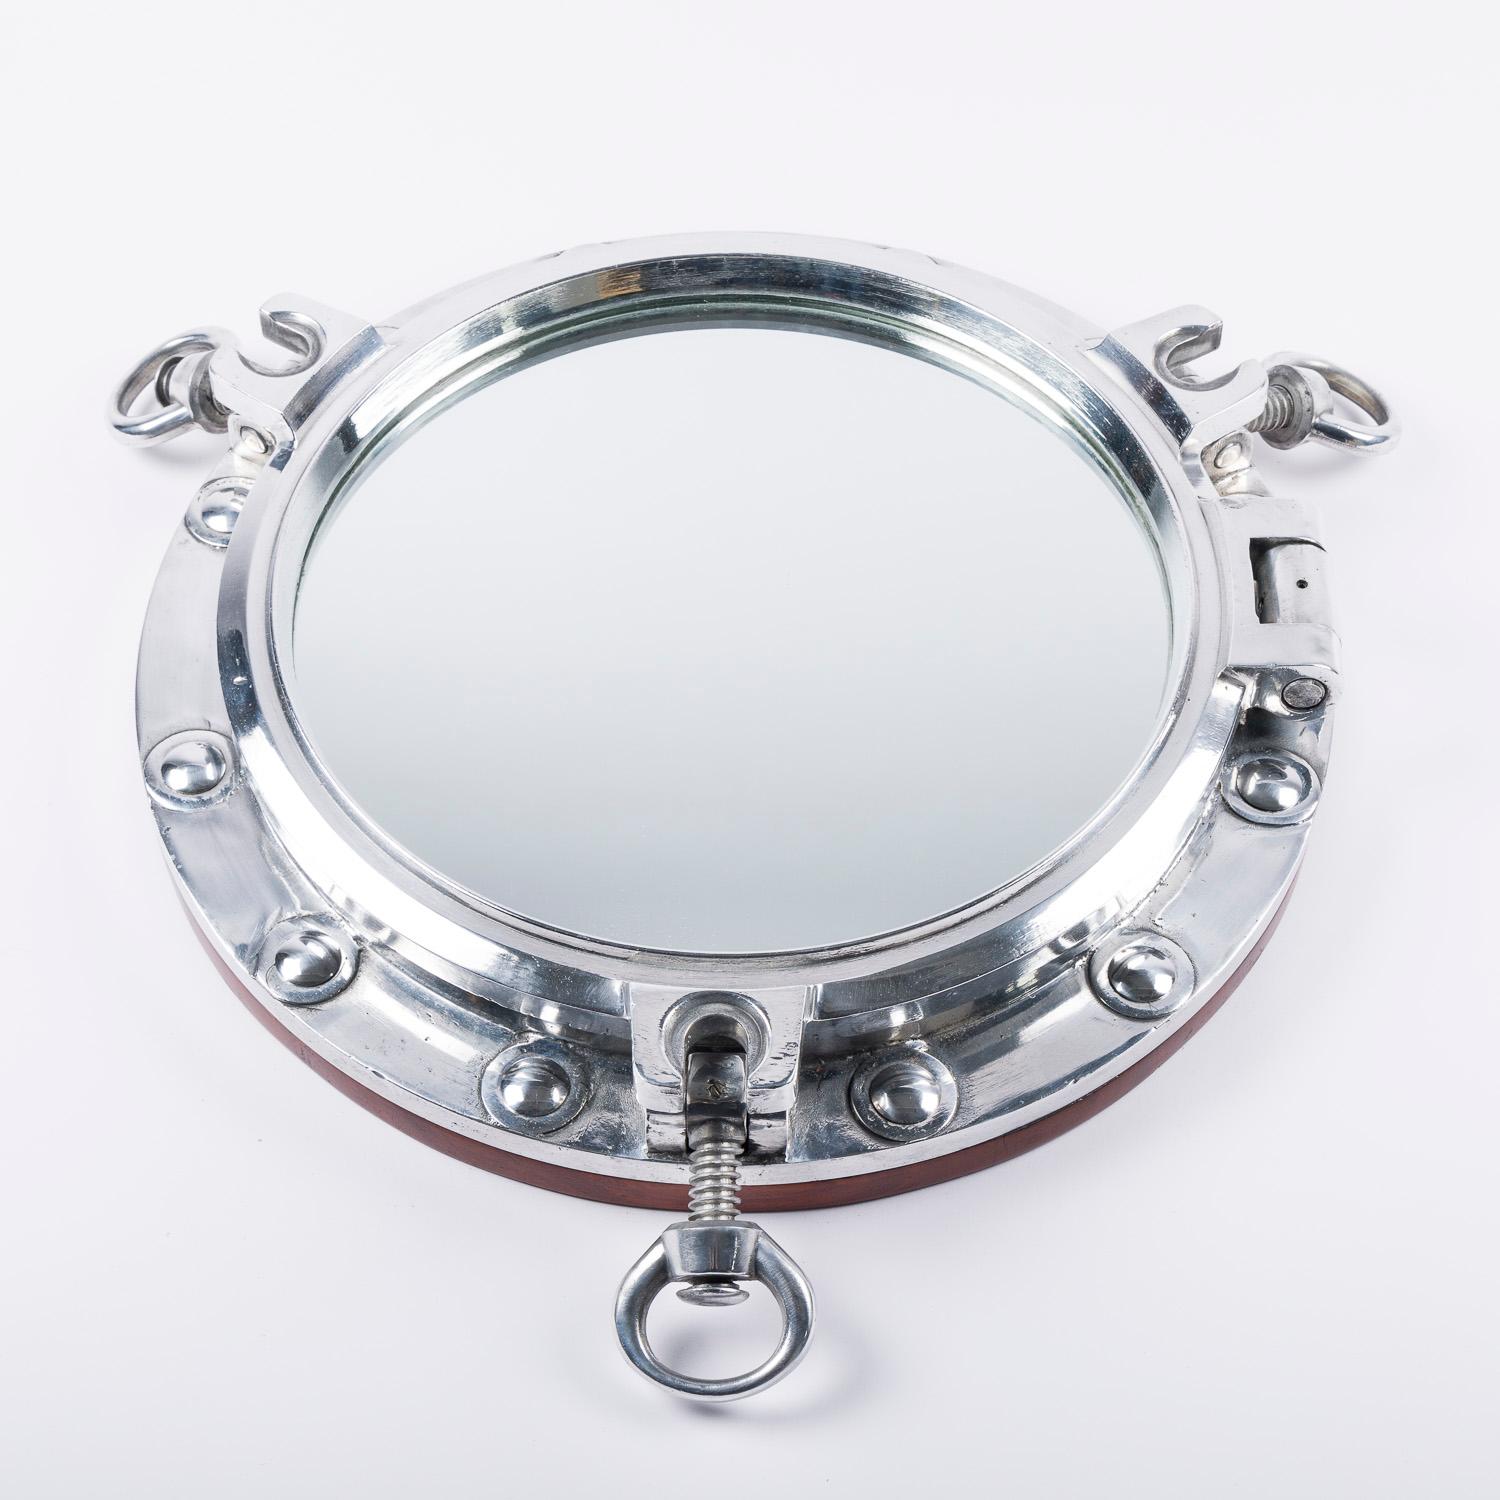 European ship's circular aluminium porthole mirror for wall mounting